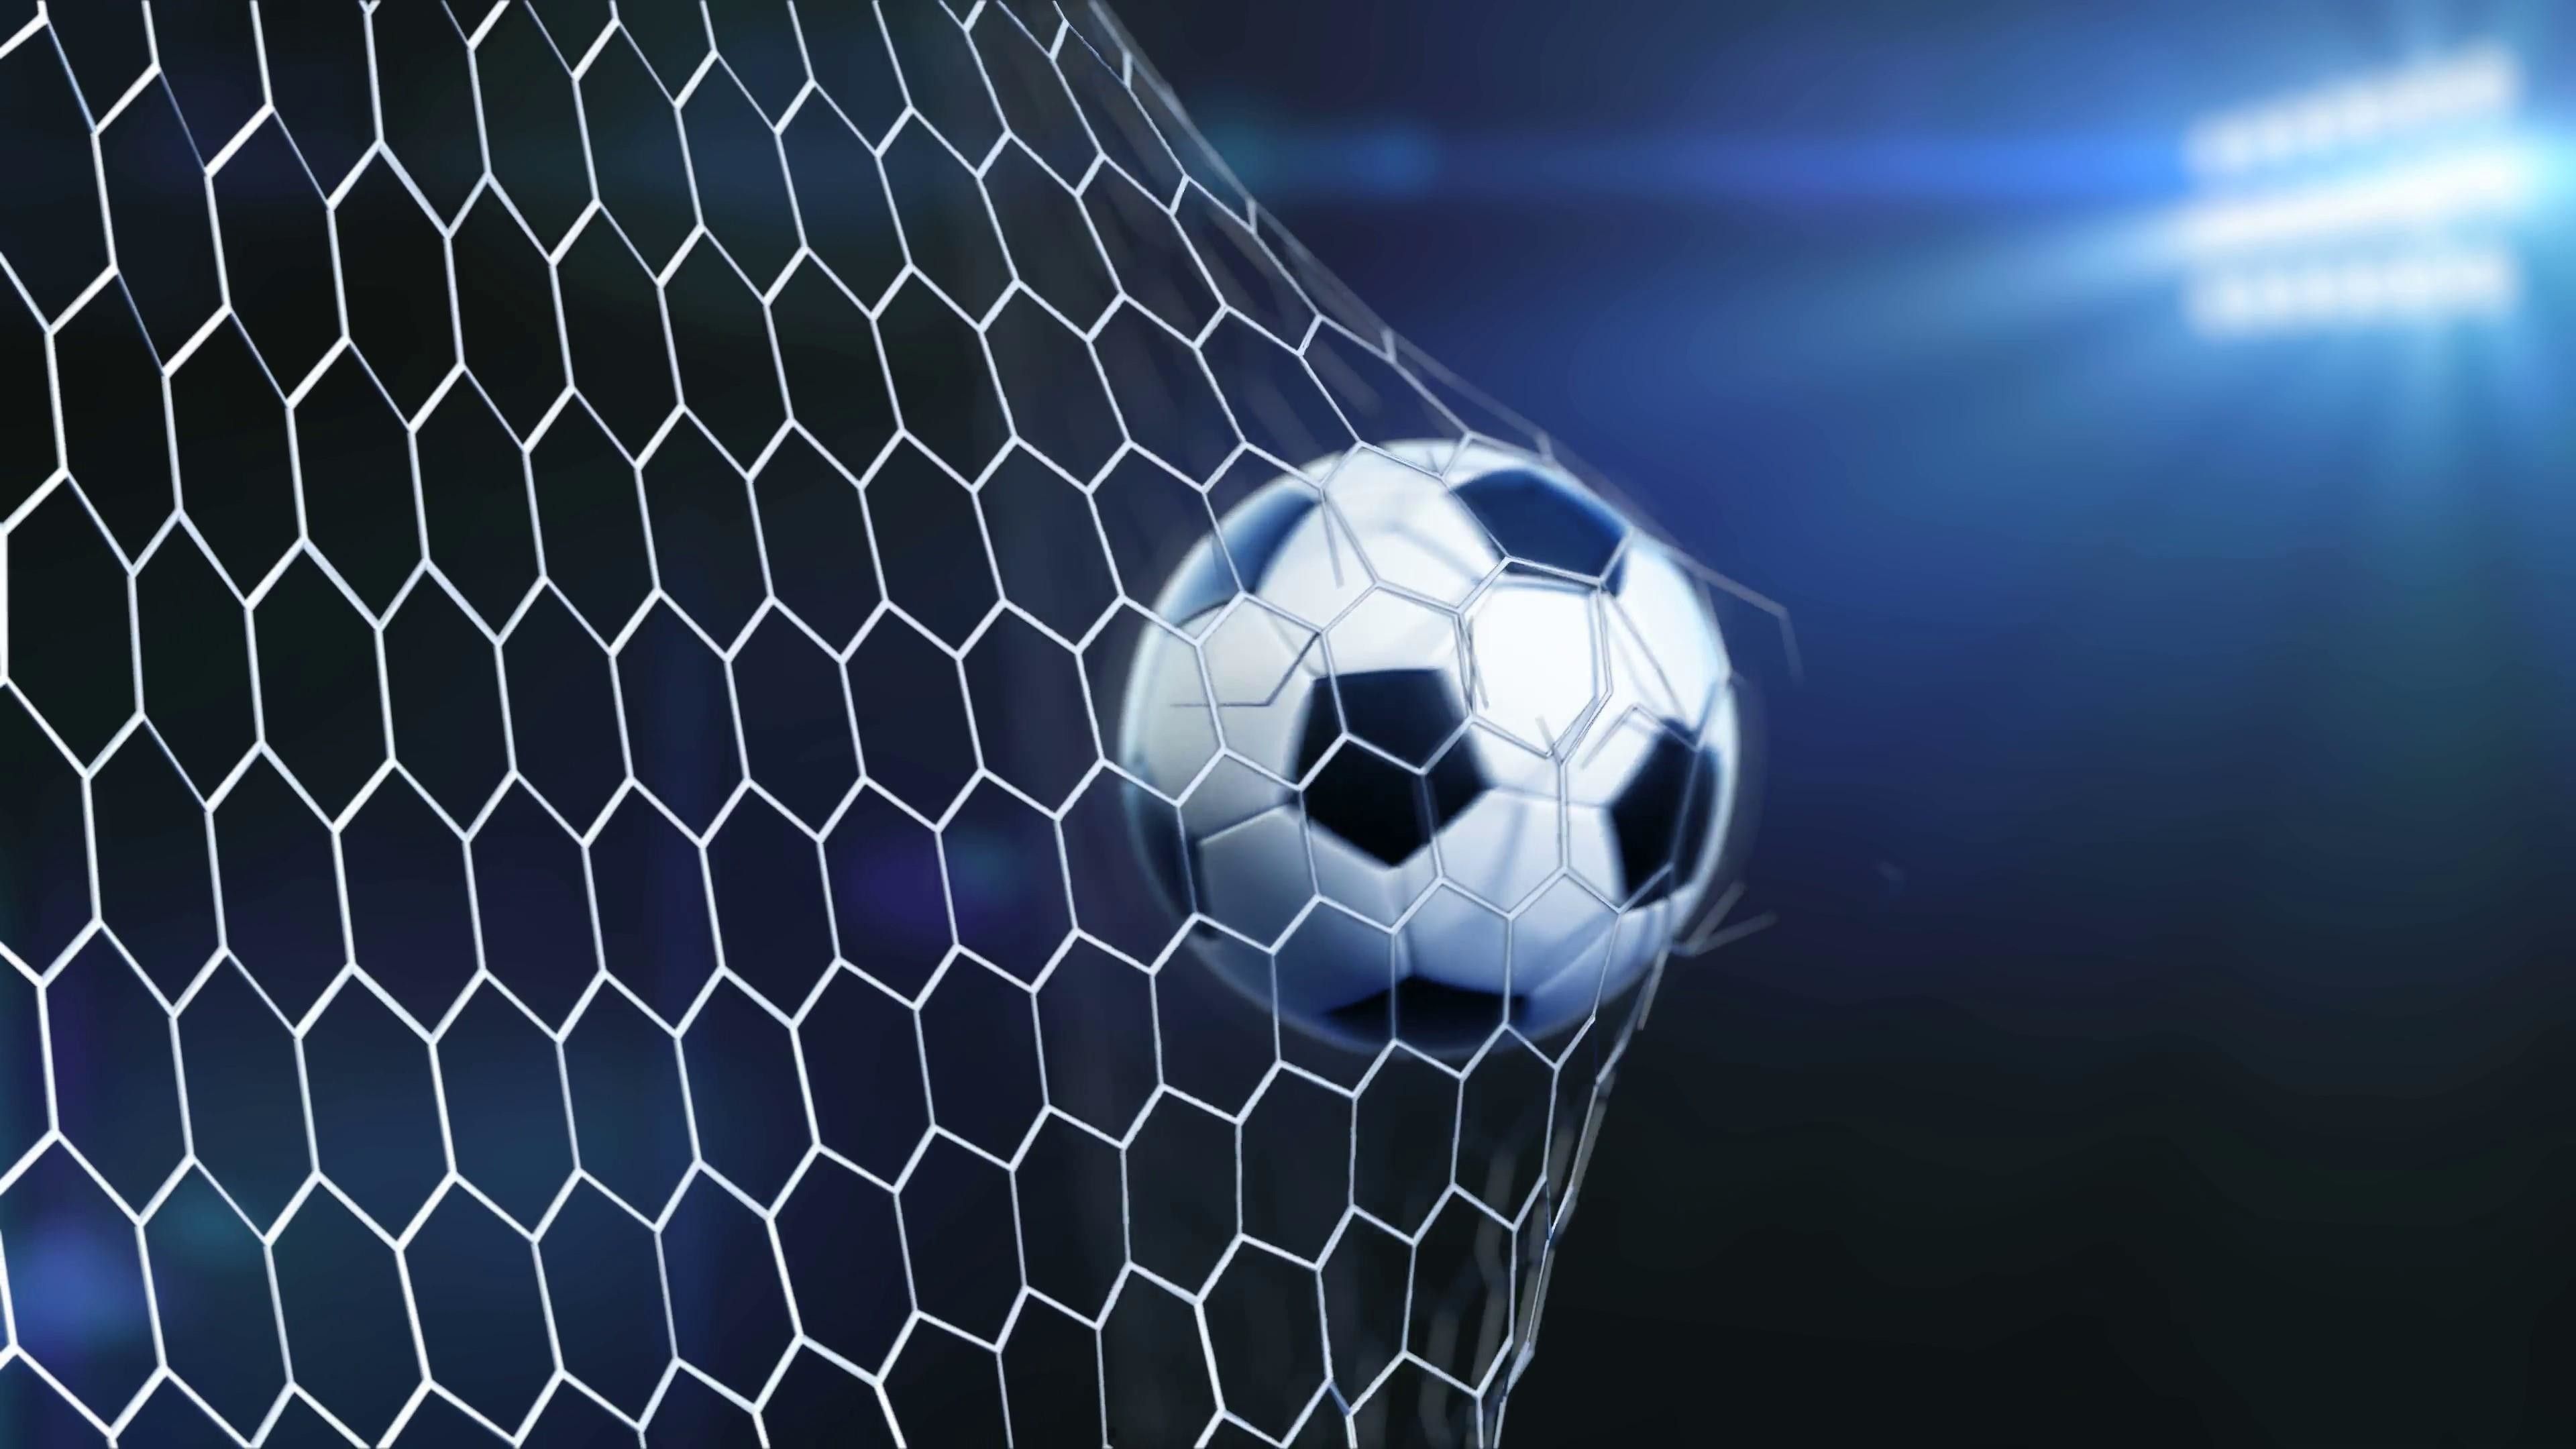 A soccer ball is in the net of goal - Soccer